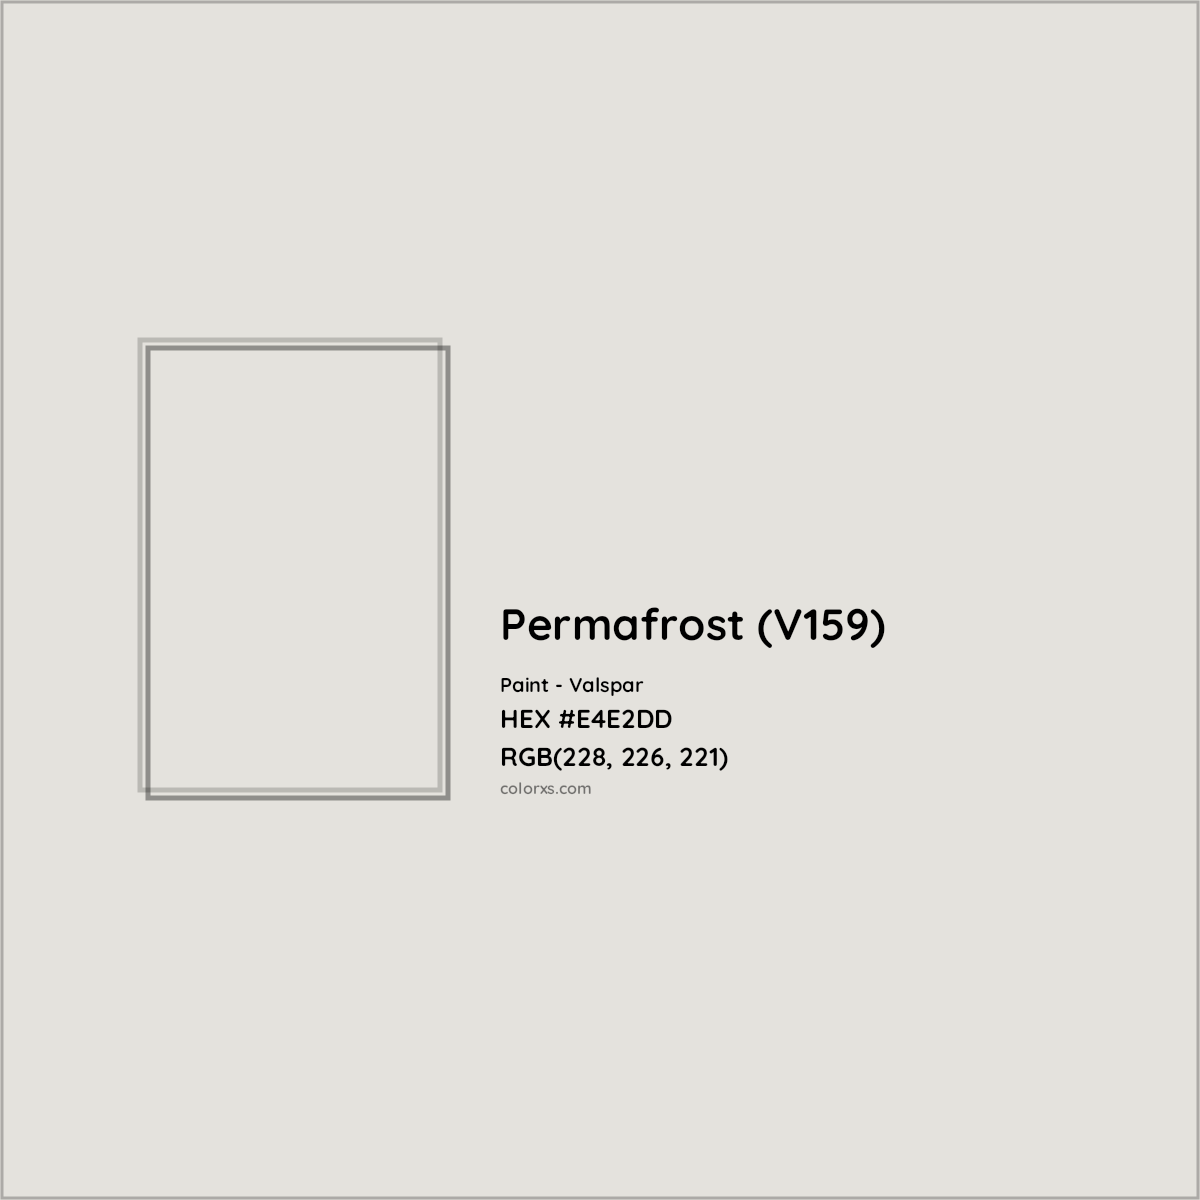 HEX #E4E2DD Permafrost (V159) Paint Valspar - Color Code